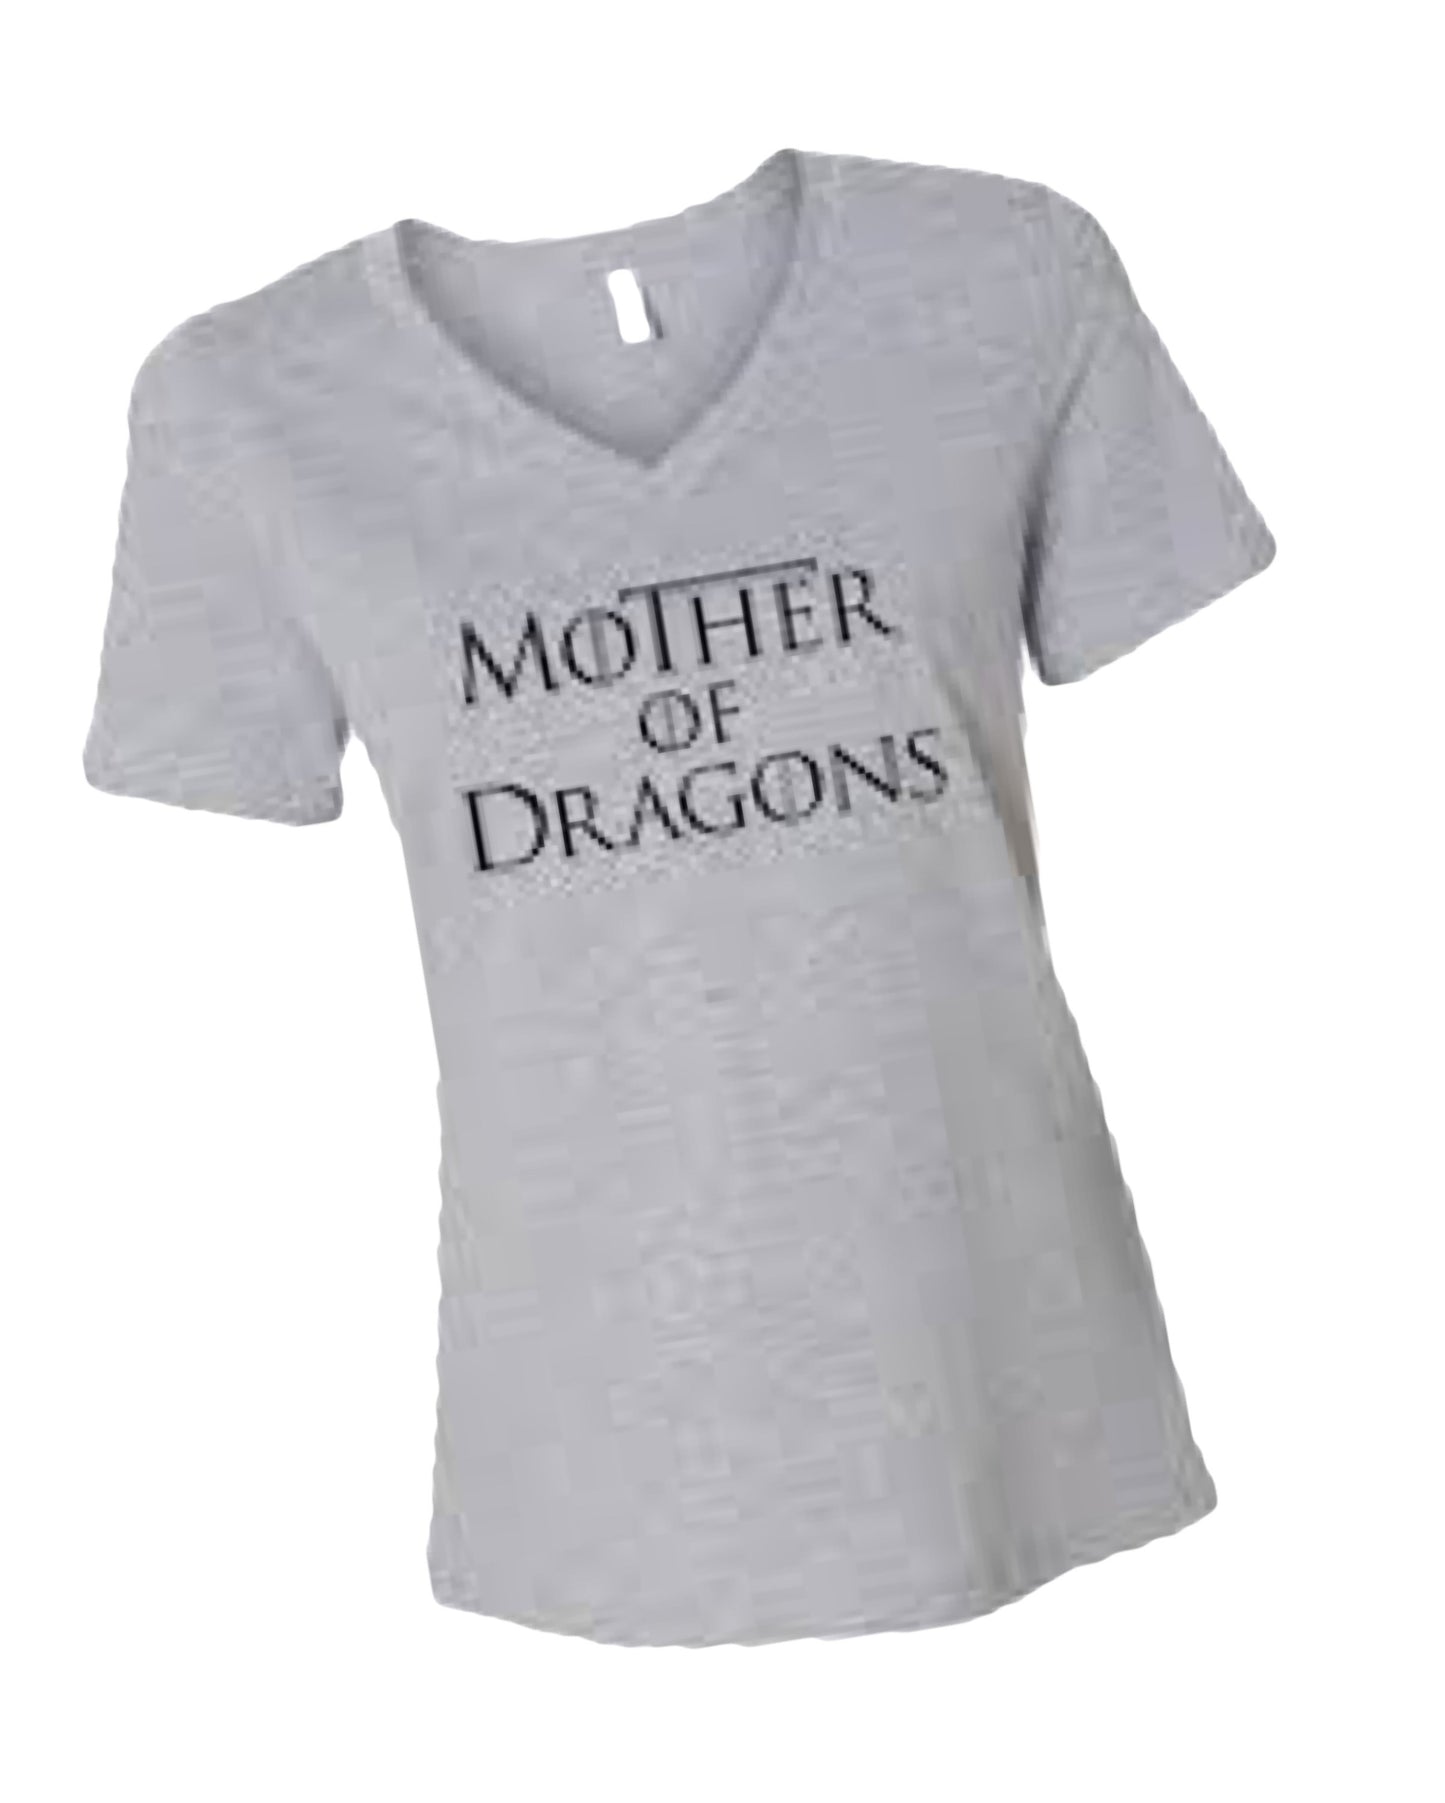 mother of dragons shirt, game of thrones, mom shirt, mom life tee, graphic tee, unisex tee, girl mom, me and my girls shirt, matching tee